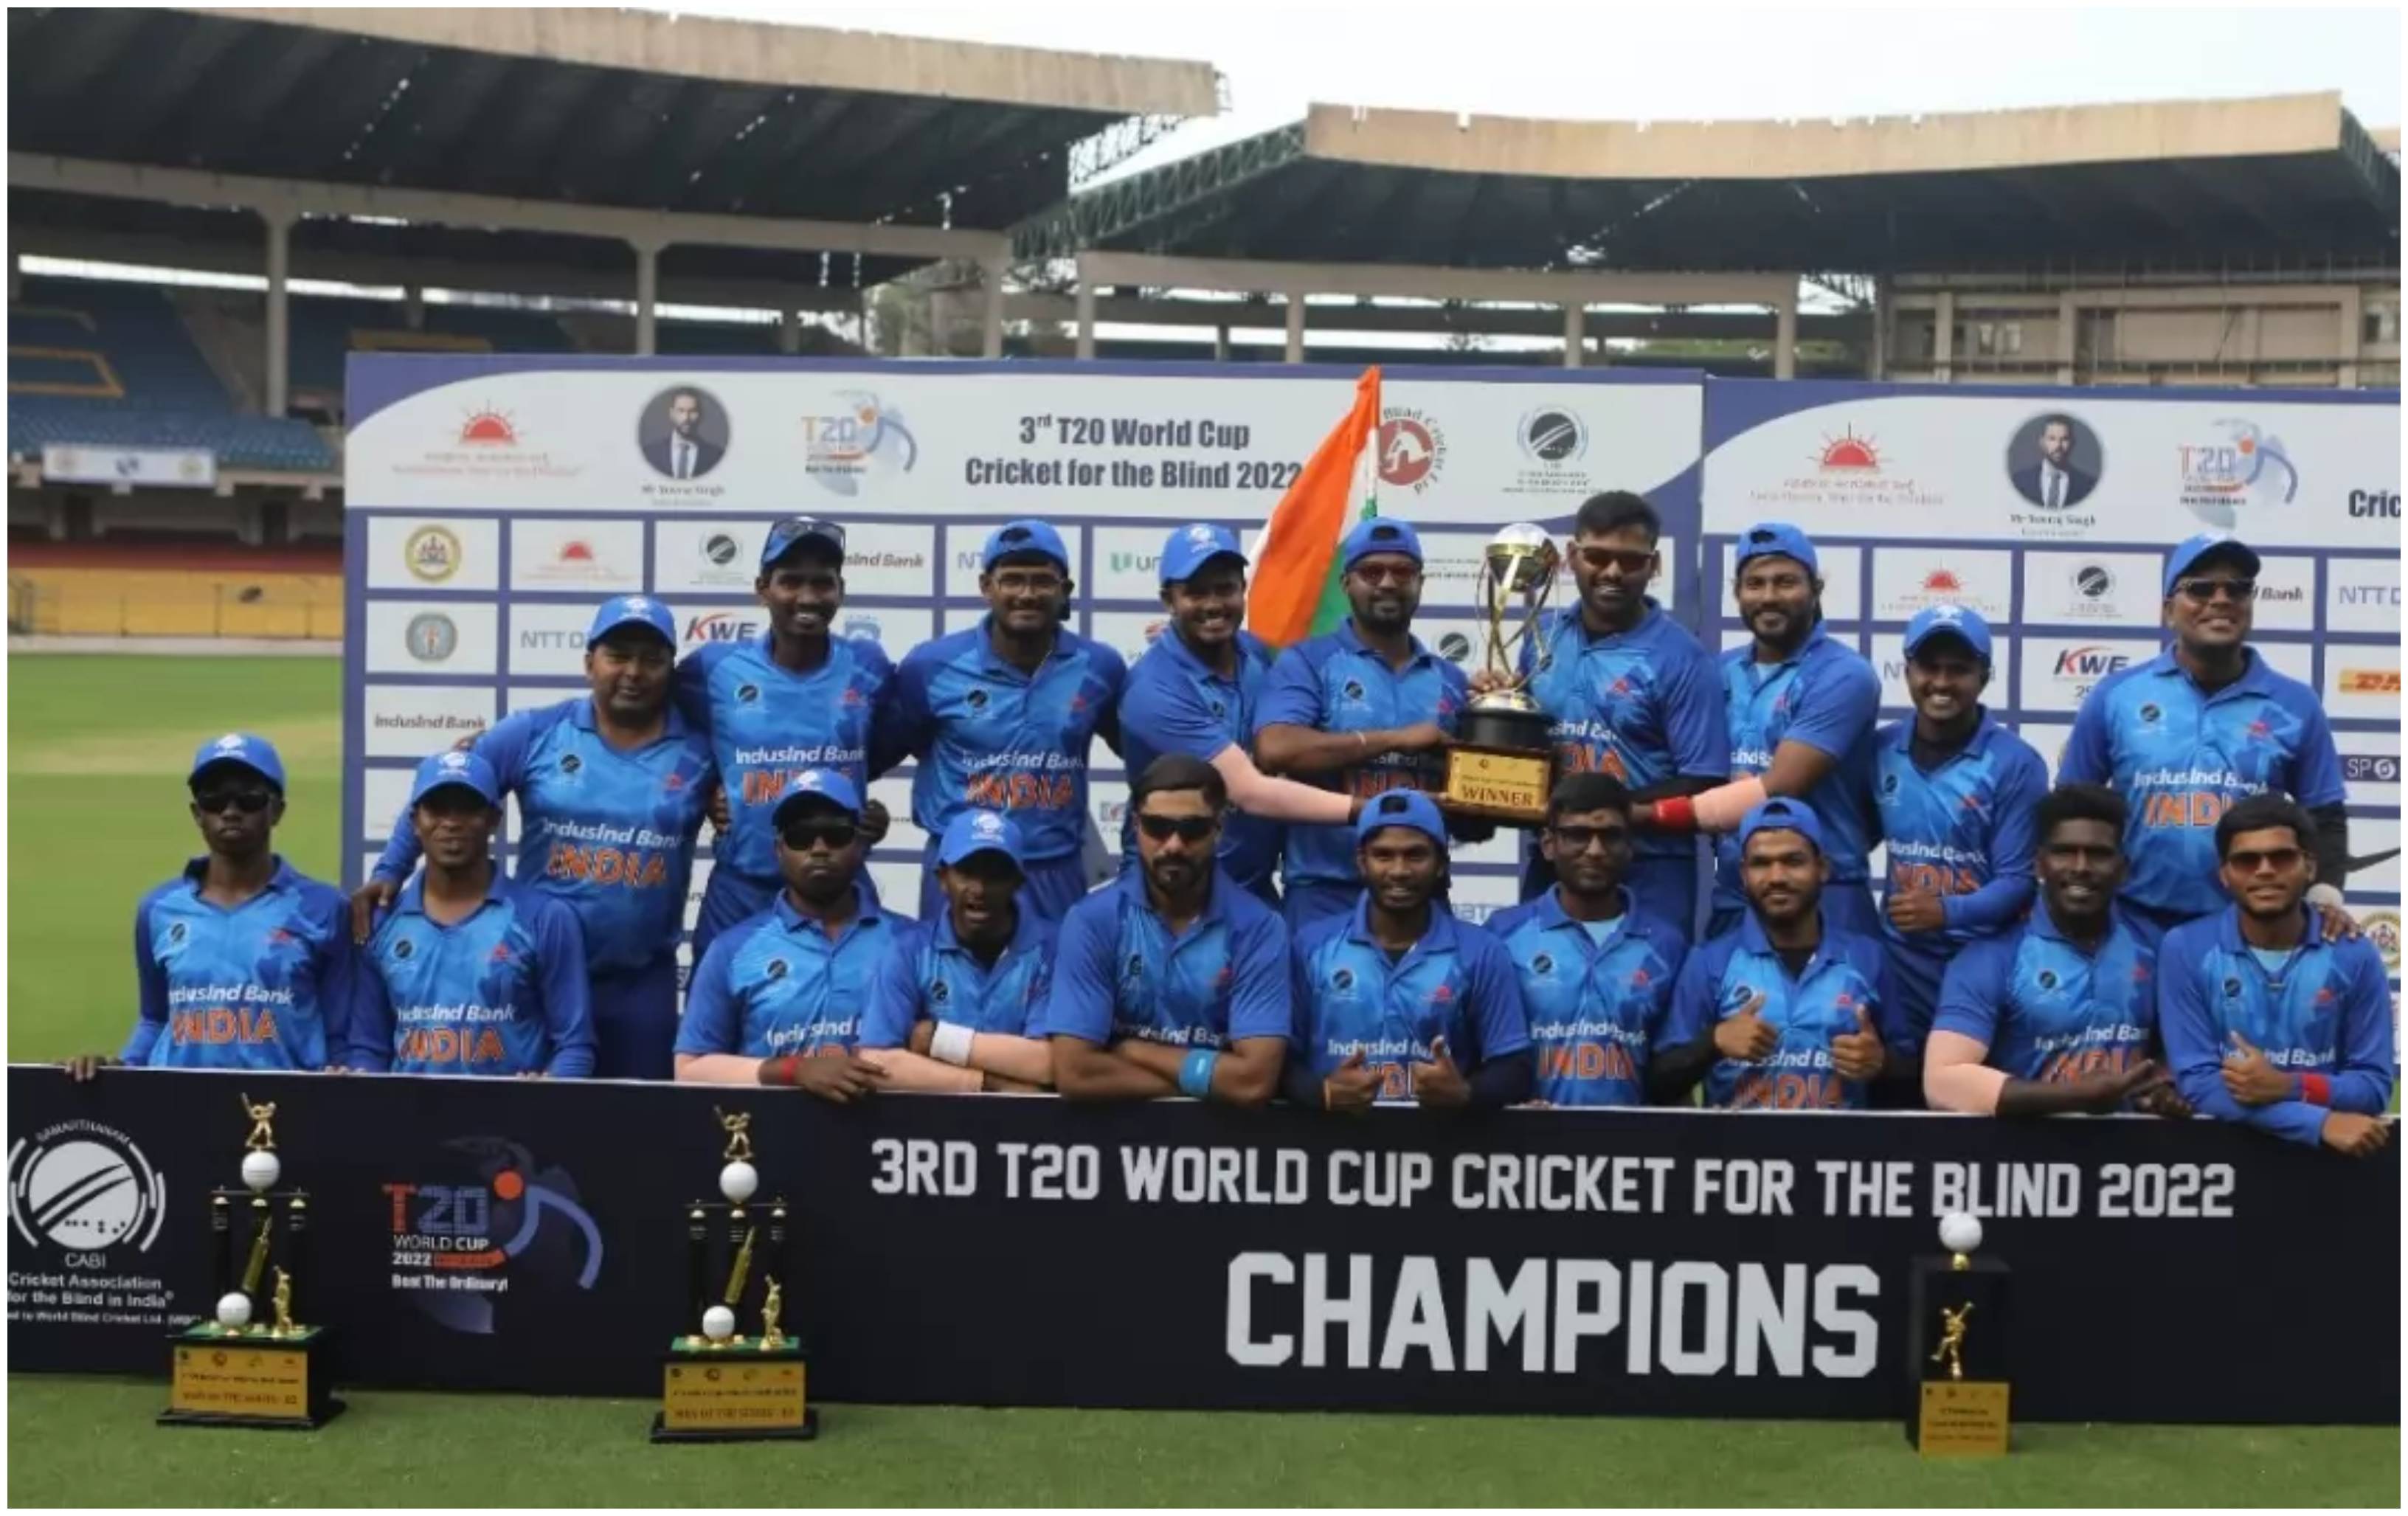 India defeat Bangladesh to clinch T20 World Cup 2022 for Blind; PM Modi congratulates